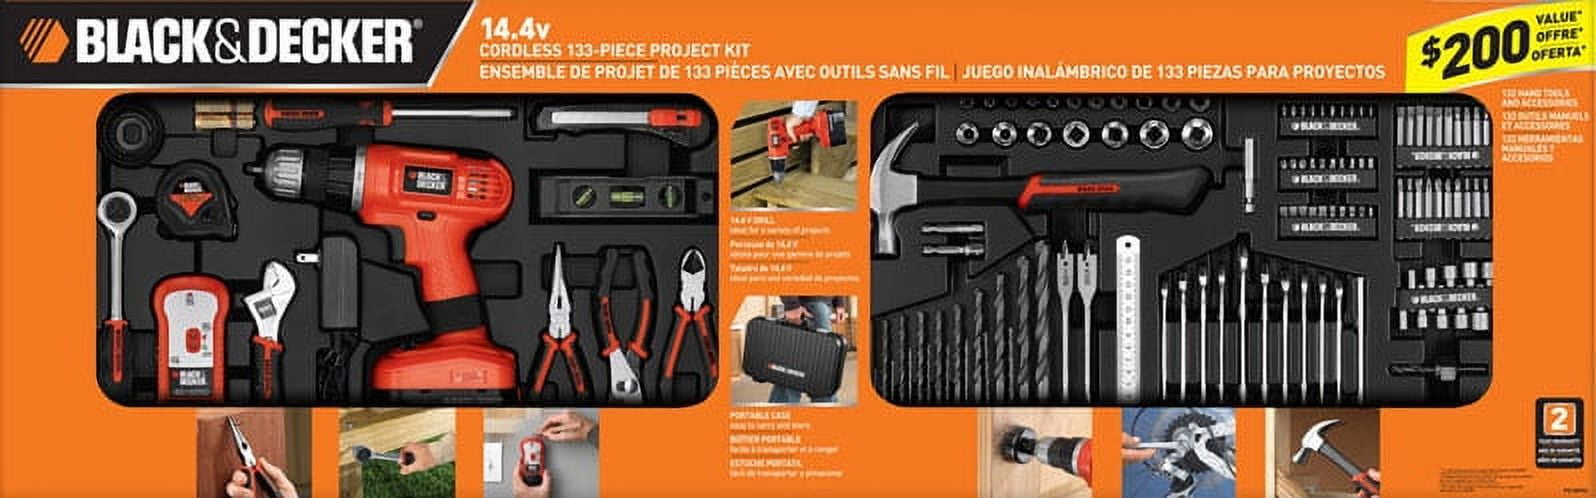 Black & Decker Firestorm 14.4V 4-Tools w/Hard Case,NEW Charger